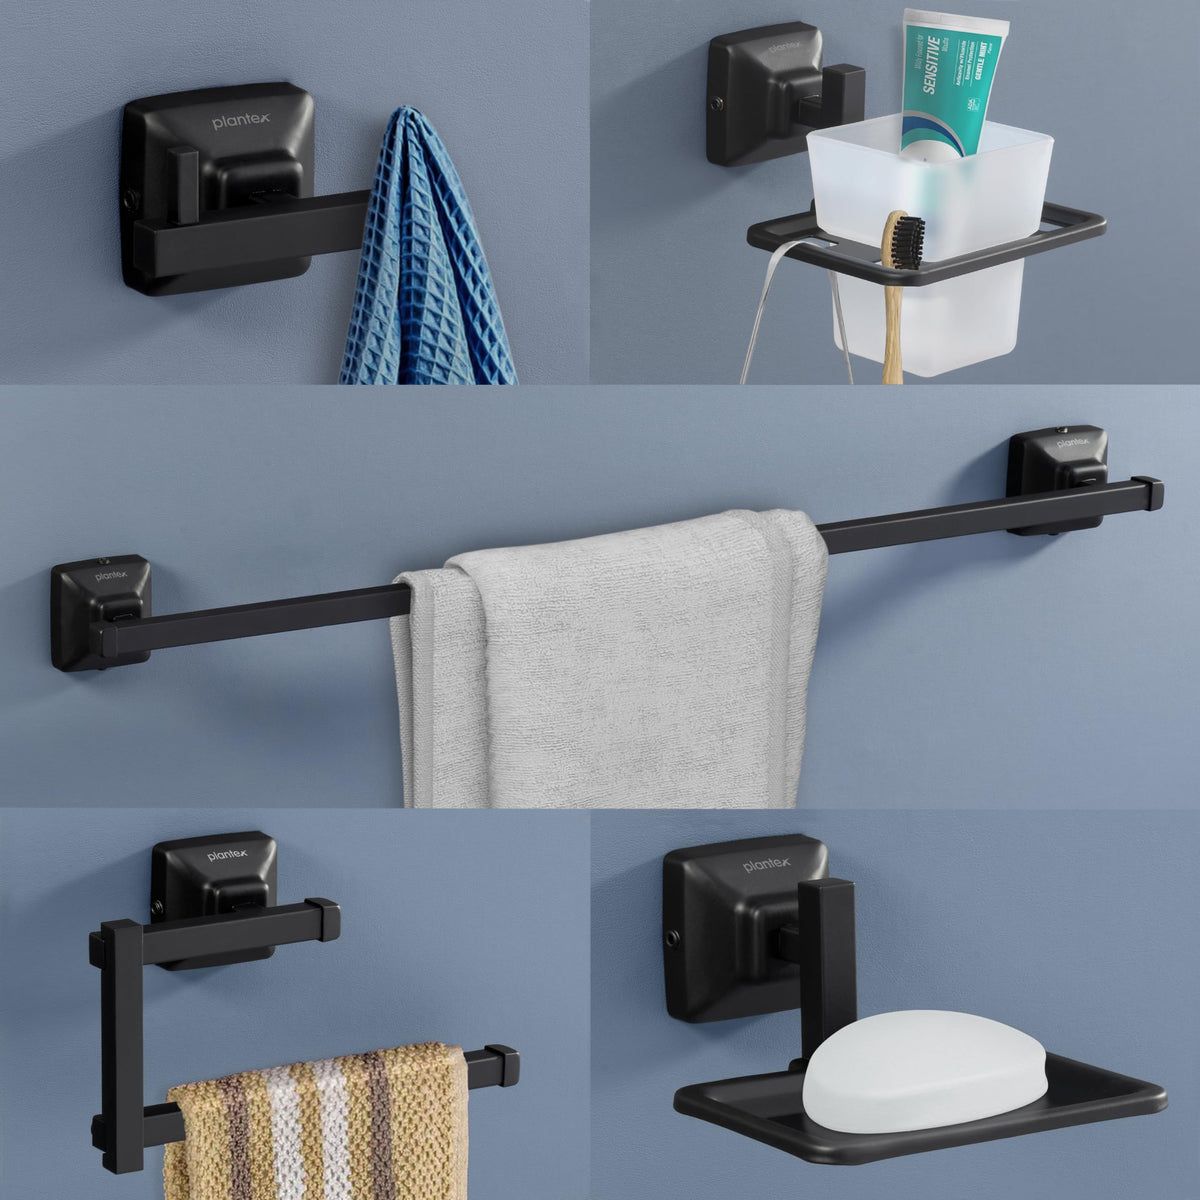 Plantex 304 Grade Stainless Steel Bathroom Accessories Set of 5 - Towel Rod/Hand Napkin Hanger for Wash Basin/Soap Case/Toothbrush Holder/Robe Hook - Squaro (Black)